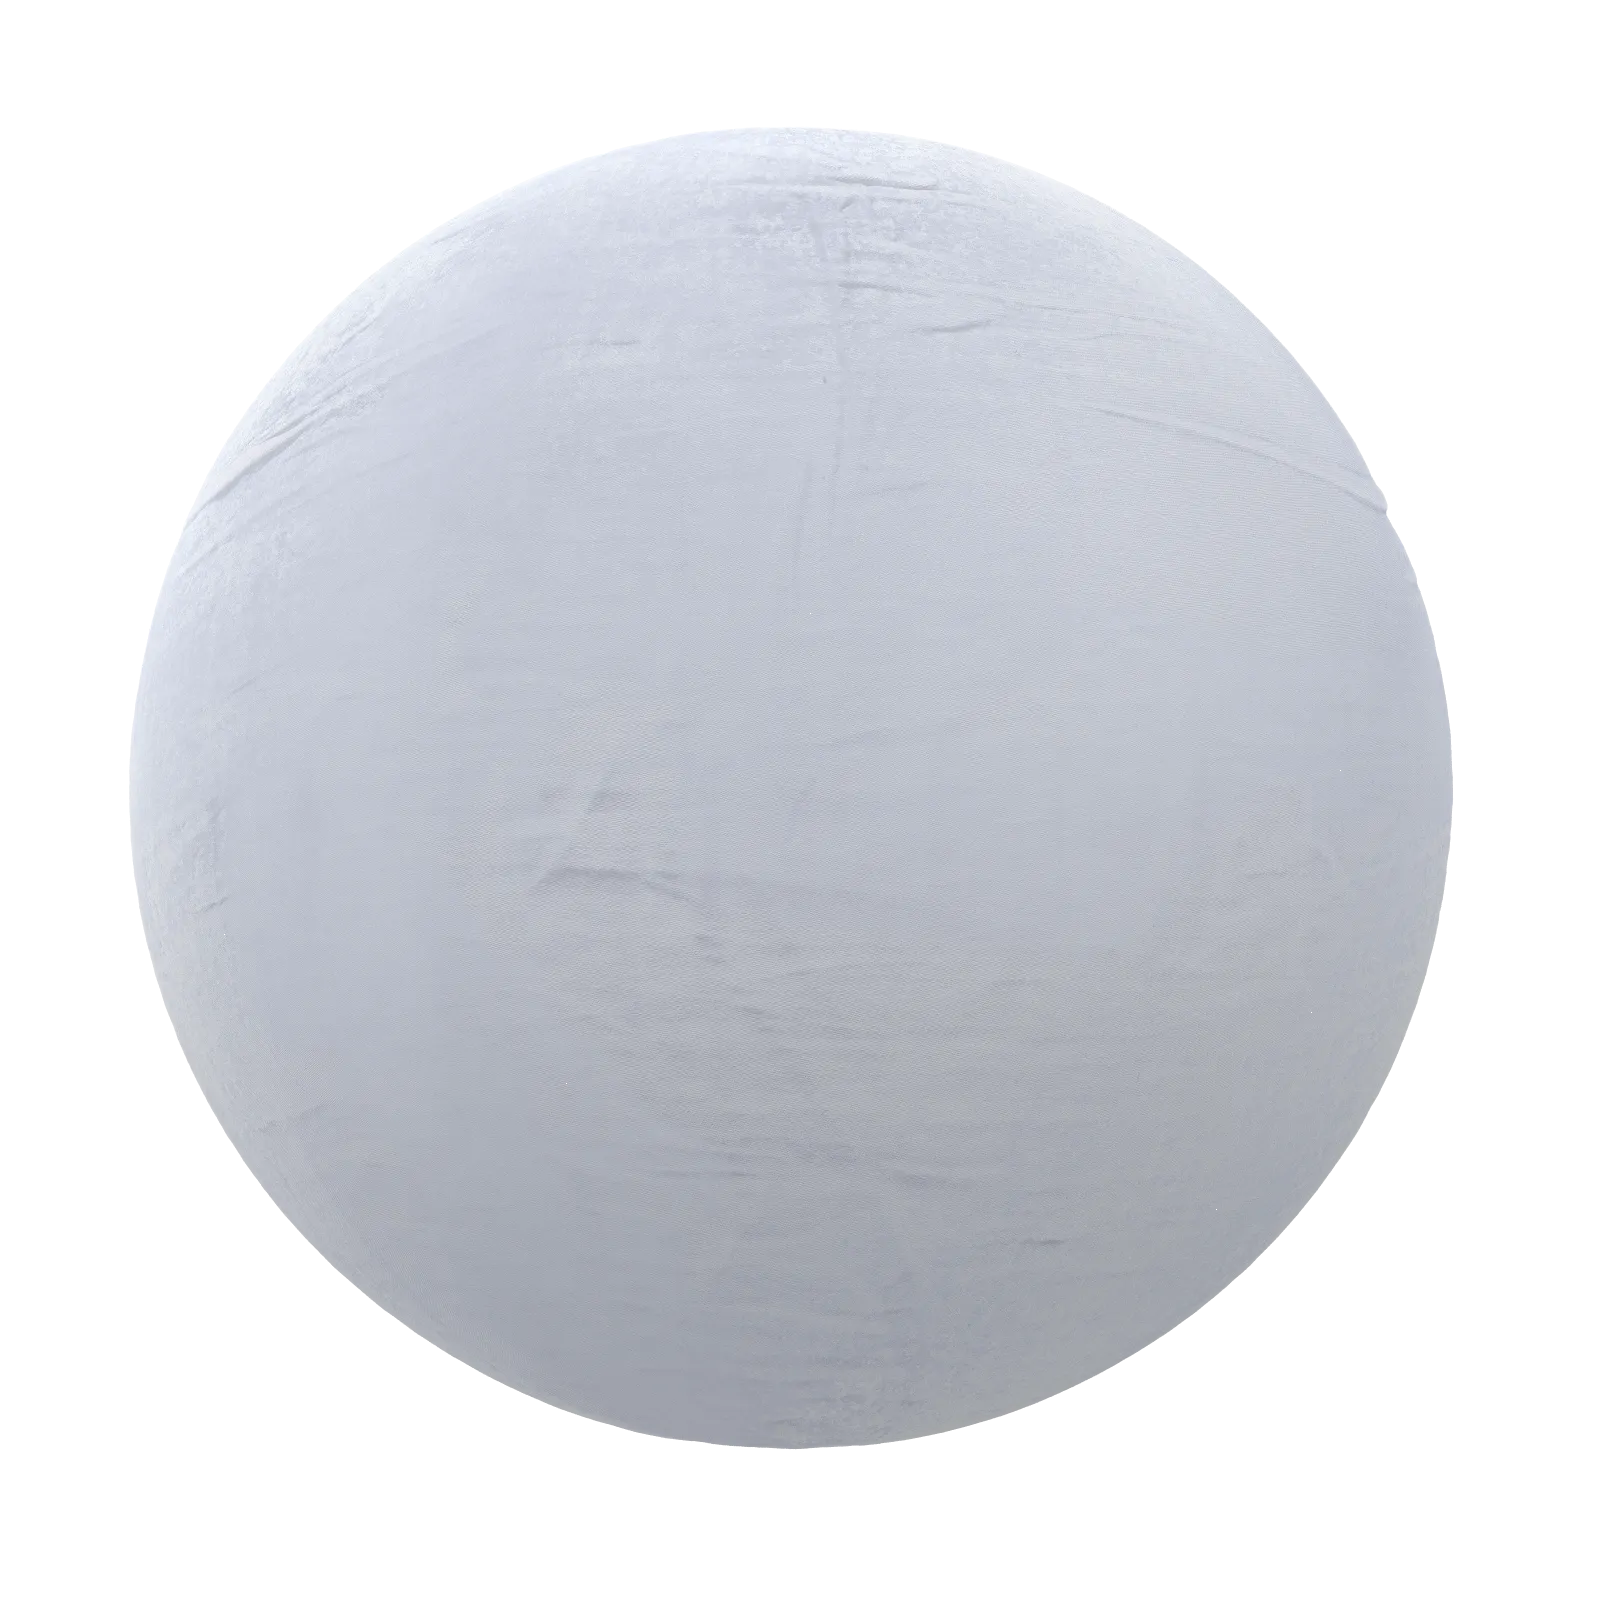 PBR CGAXIS TEXTURES – FABRICS – White Fabric 01